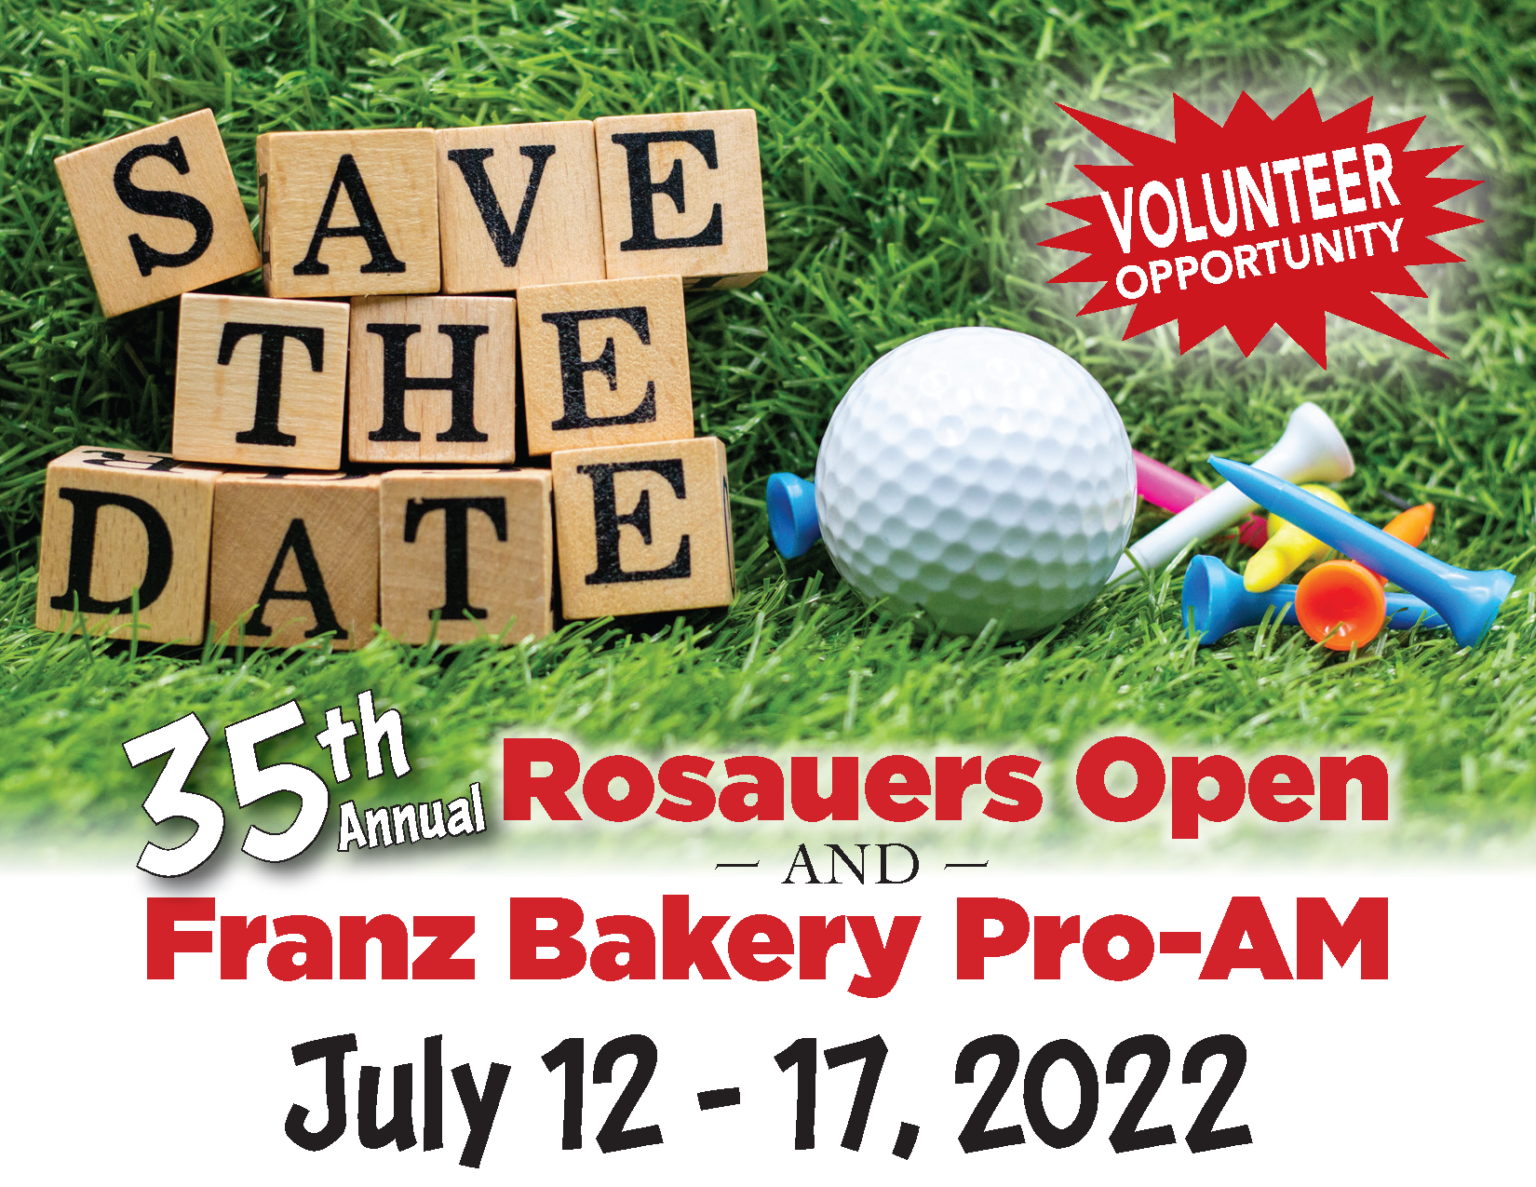 Rosauers Open and Franz Bakery ProAm Rosauers Supermarkets